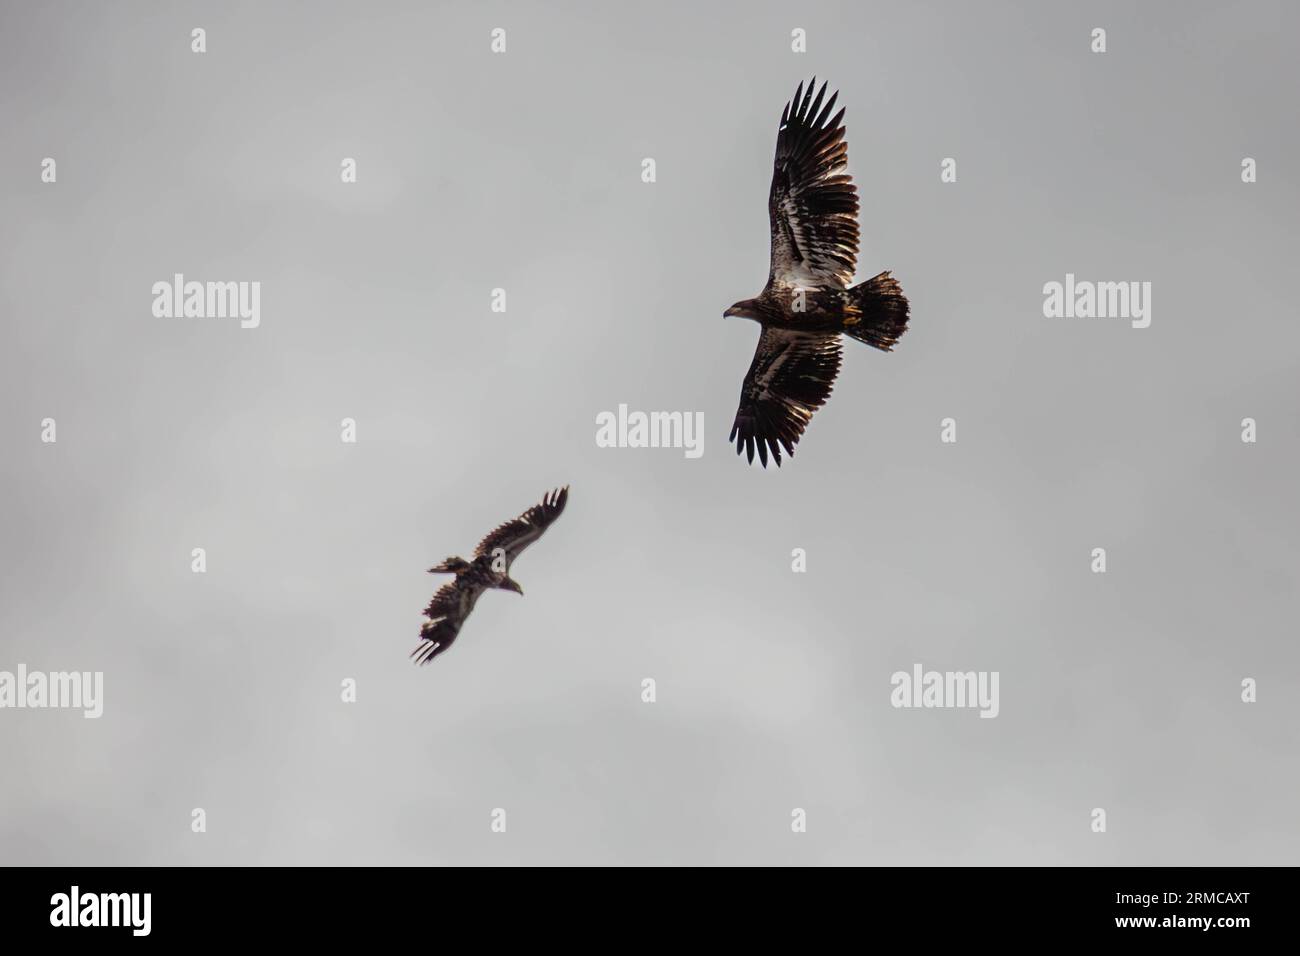 Bald eagle (Haliaeetus leuocephalus) young, flying on a white background with copy space, horizontal Stock Photo